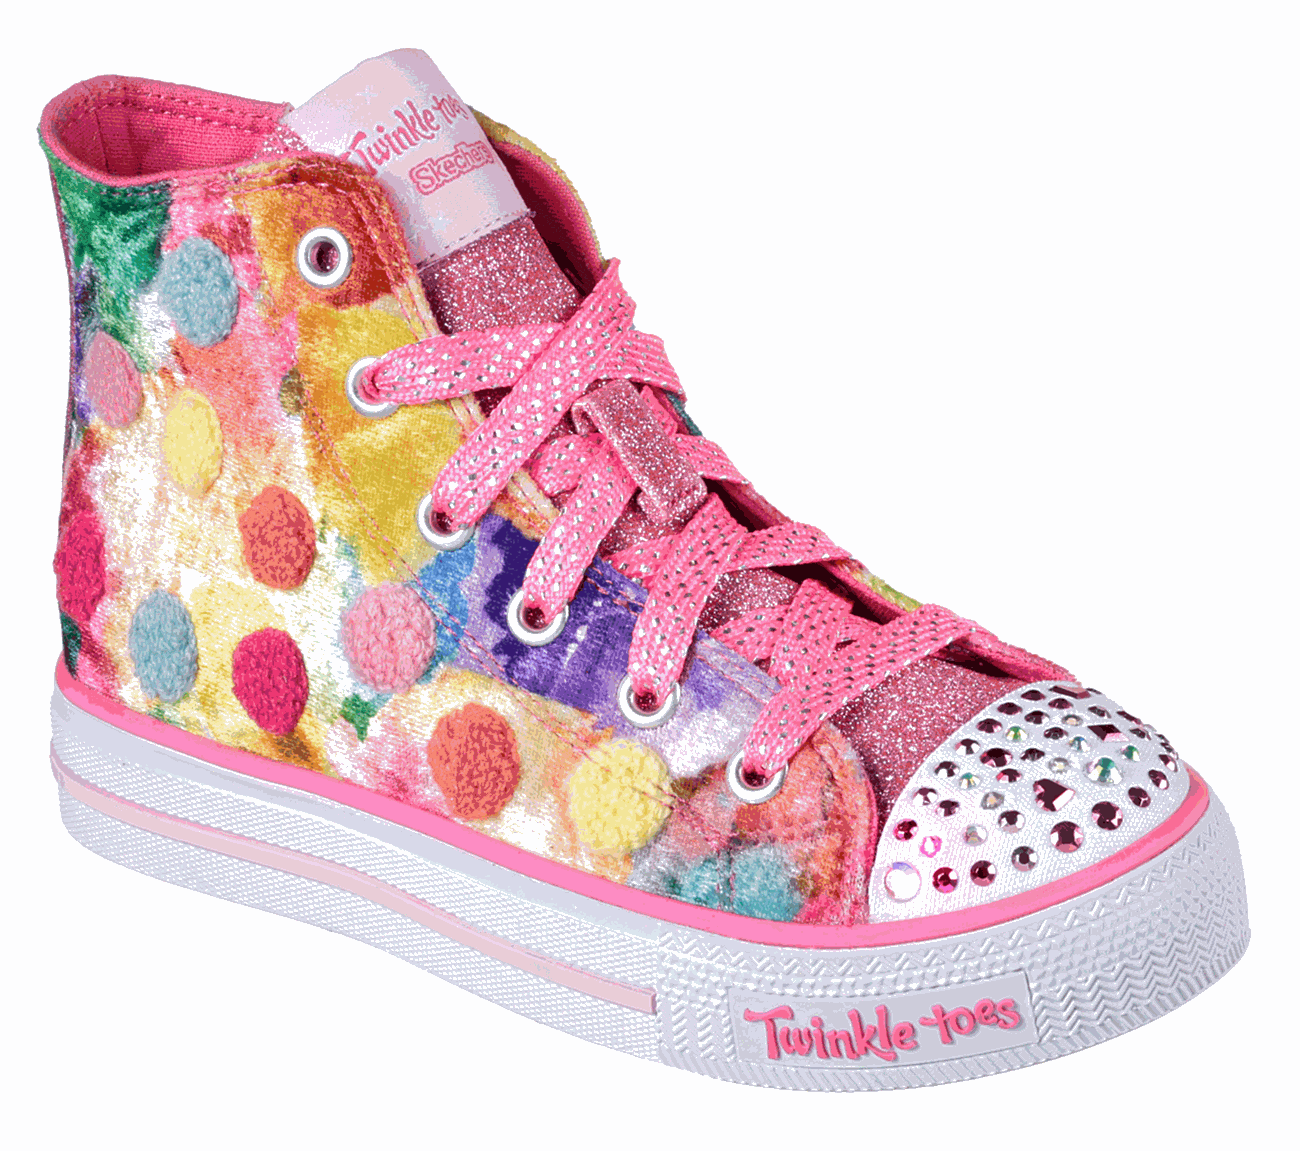 Buy SKECHERS Twinkle Toes: Shuffles - Pom Pom Pizazz S-Lights Shoes